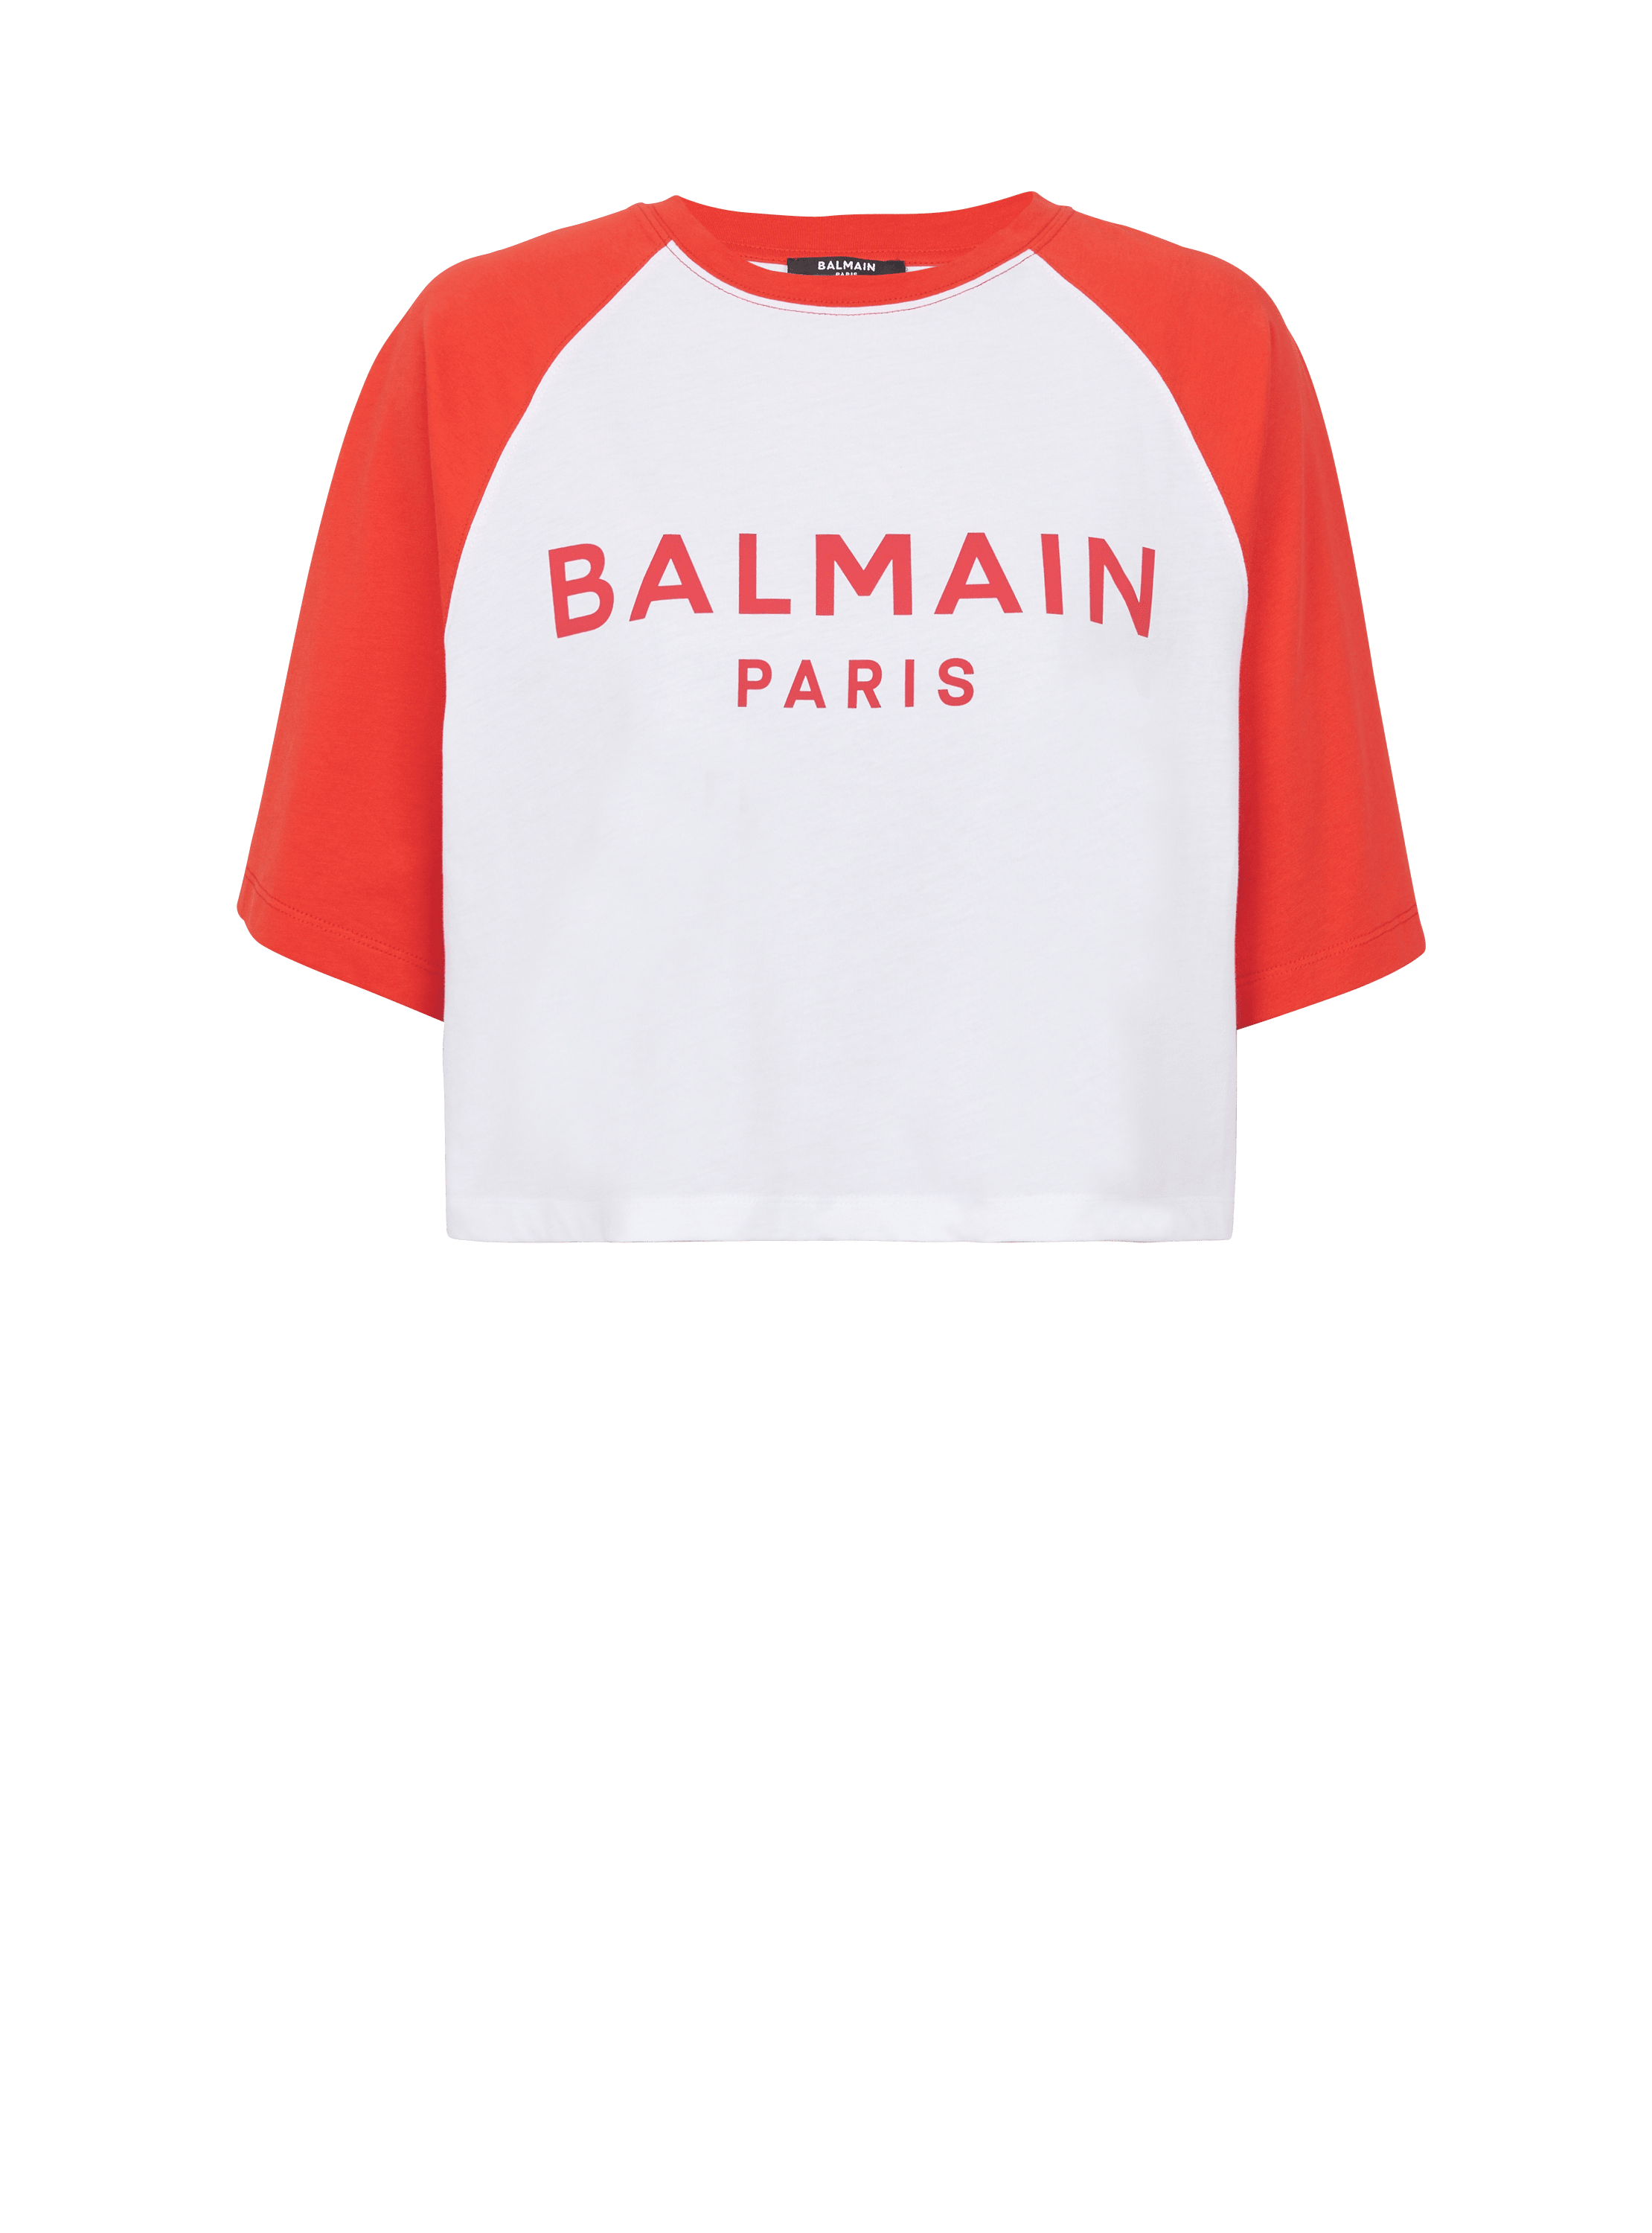 Balmain Paris 티셔츠, 빨간색, hi-res